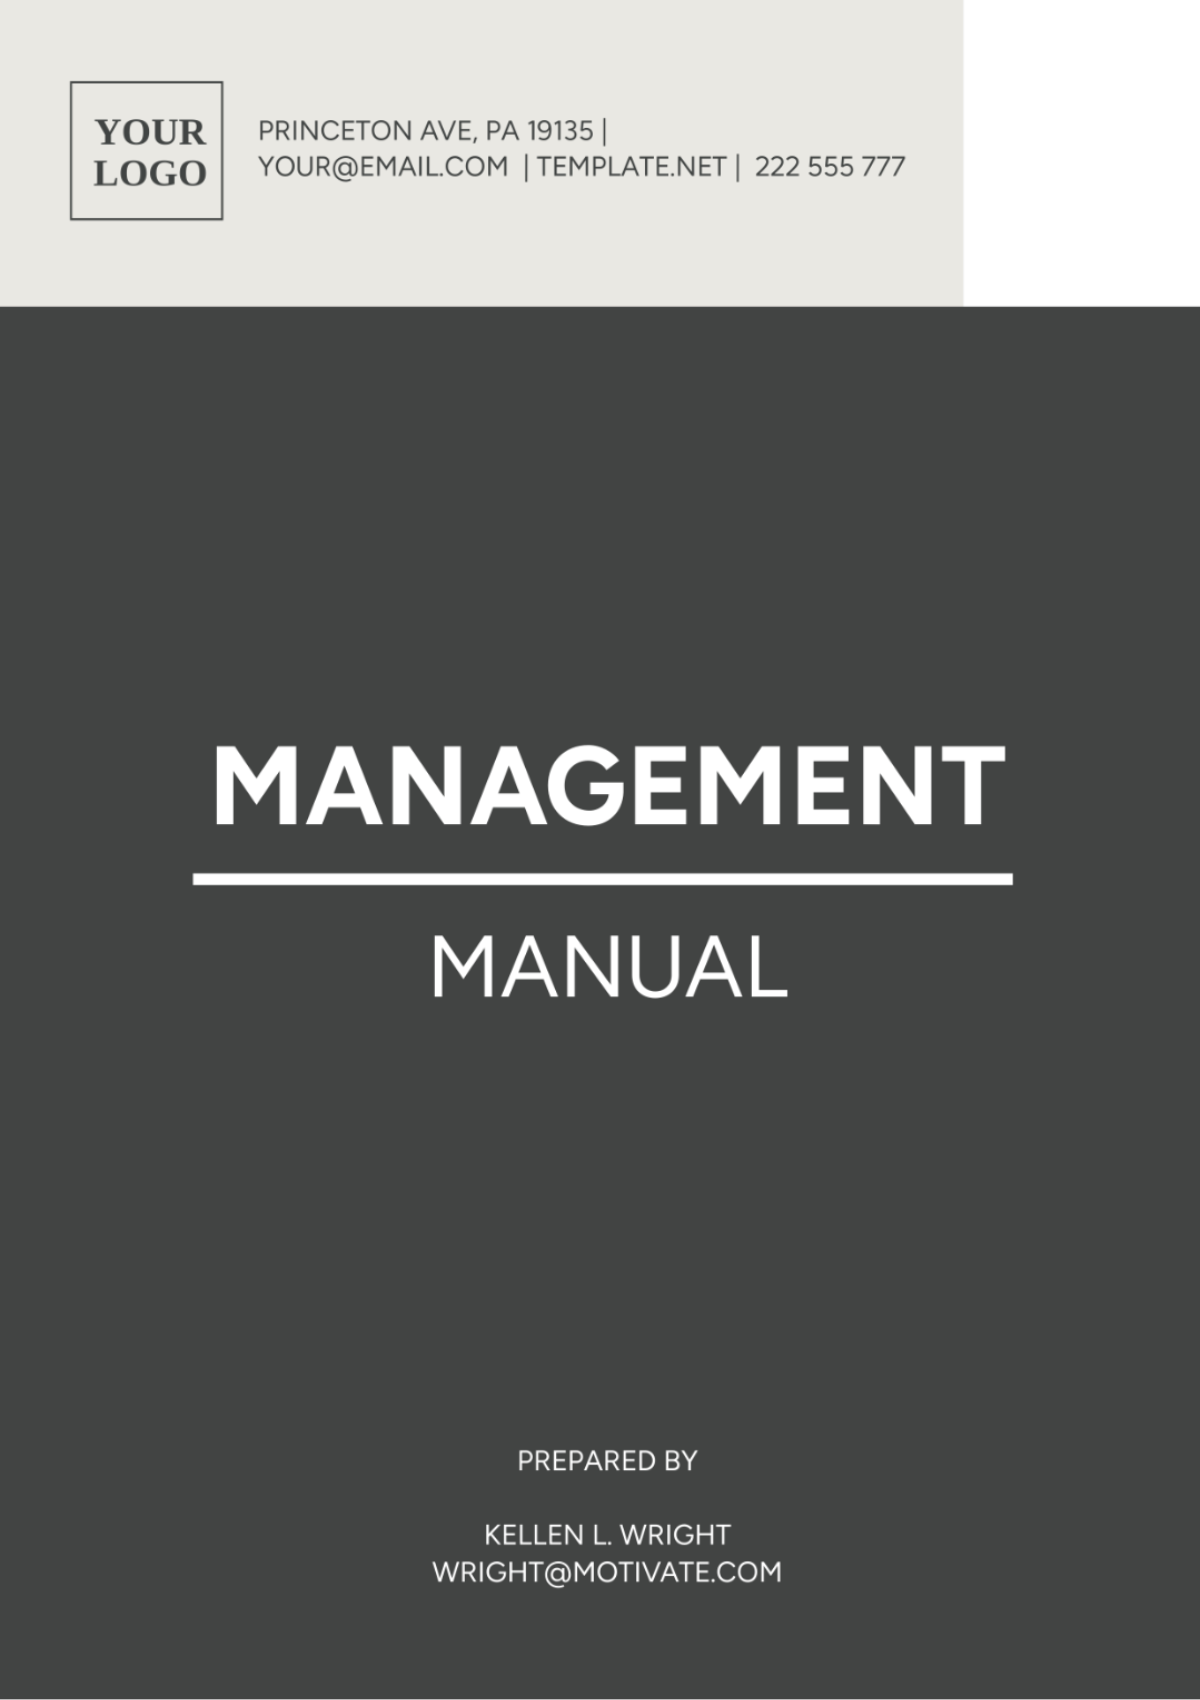 Management Manual Template